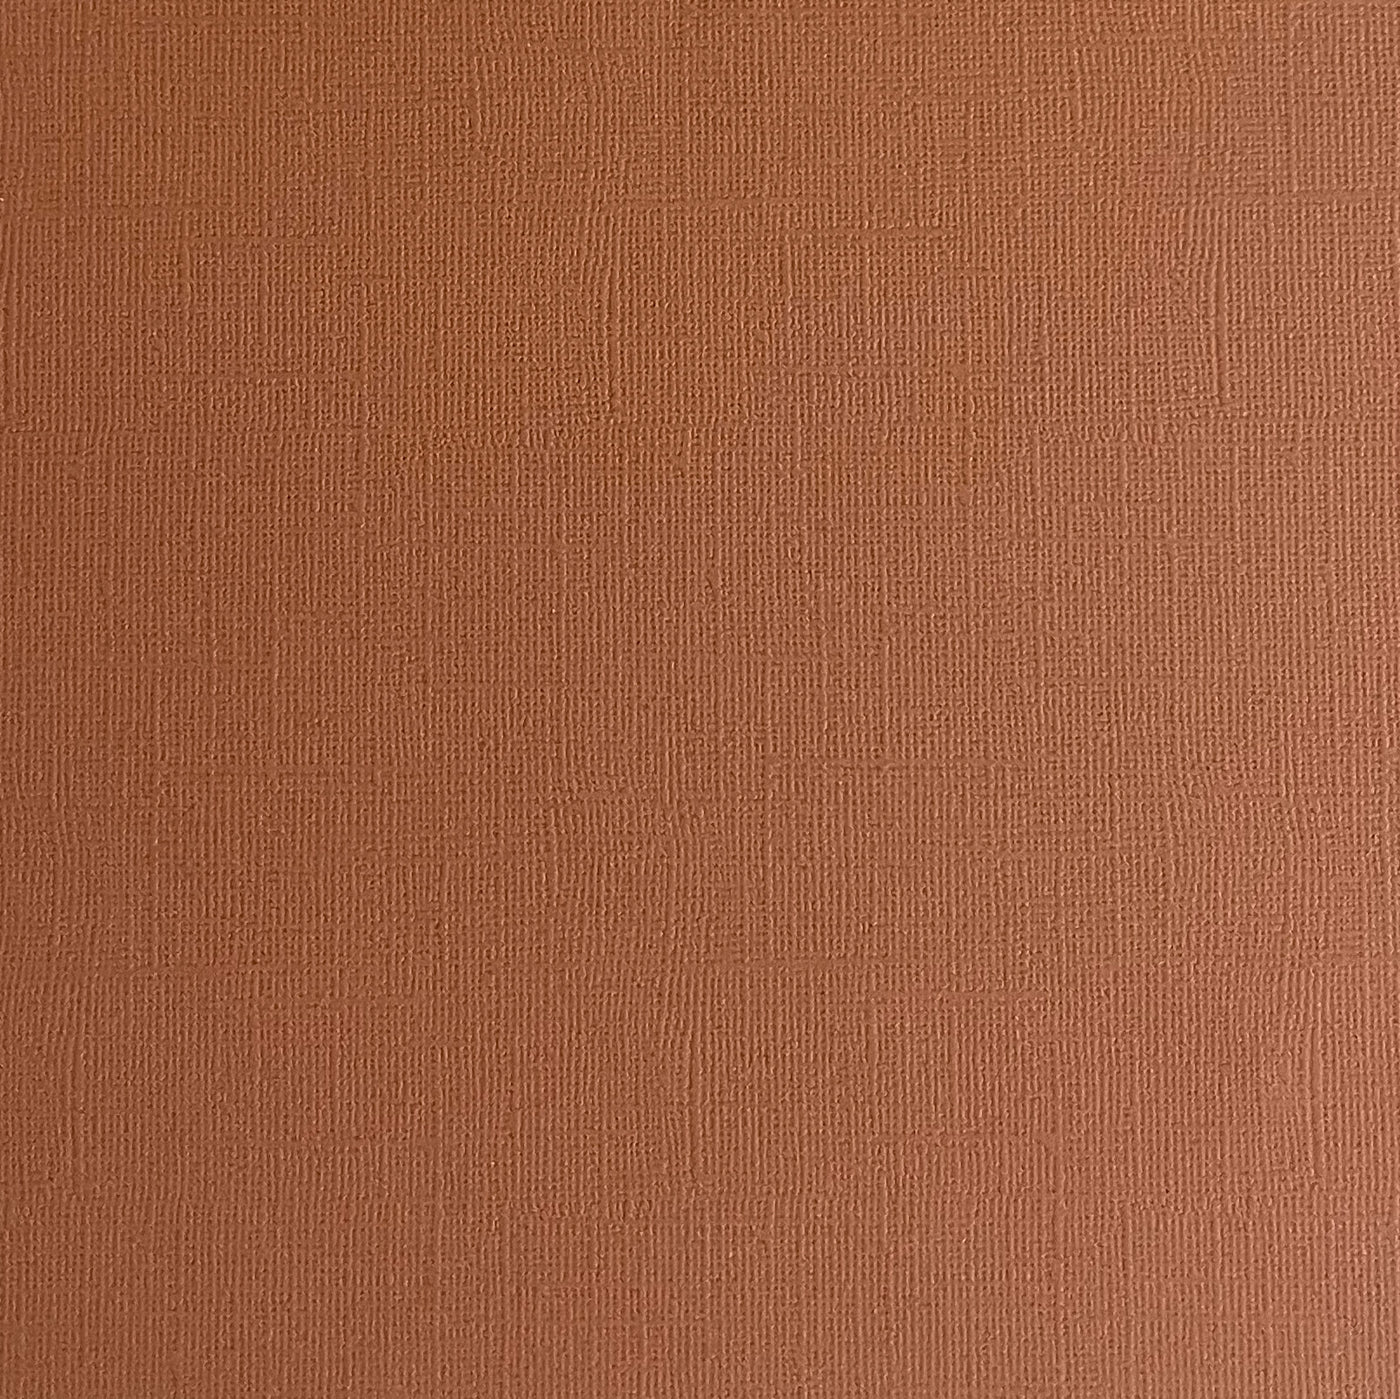 GINGERBREAD - Cinnamon Brown Textured 12x12 Cardstock - Encore Paper